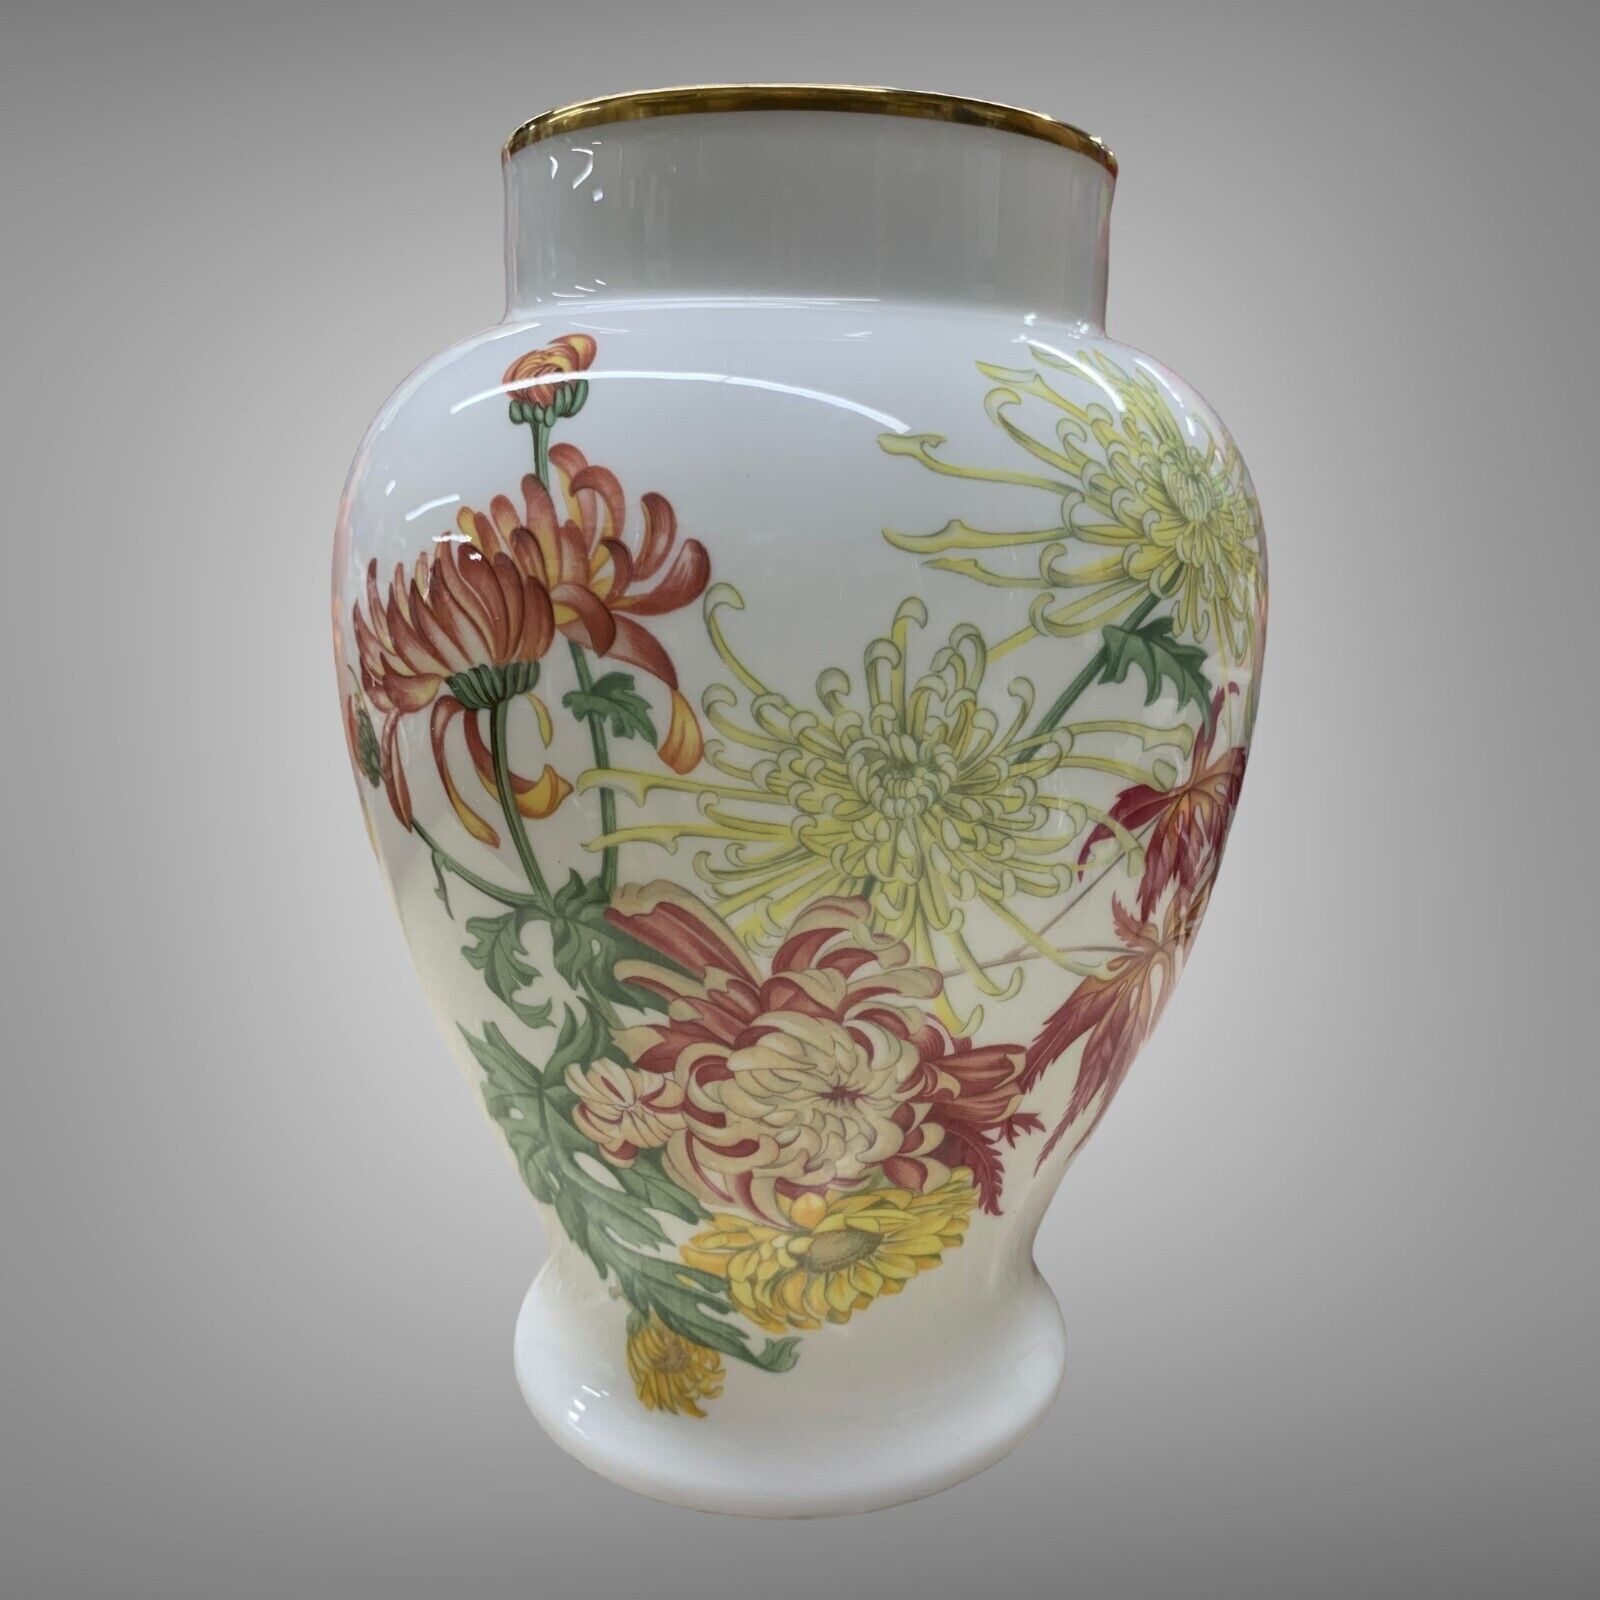 1981 Wedgwood Bone China Vase Royal Horticultural Society RHS Made in England #3